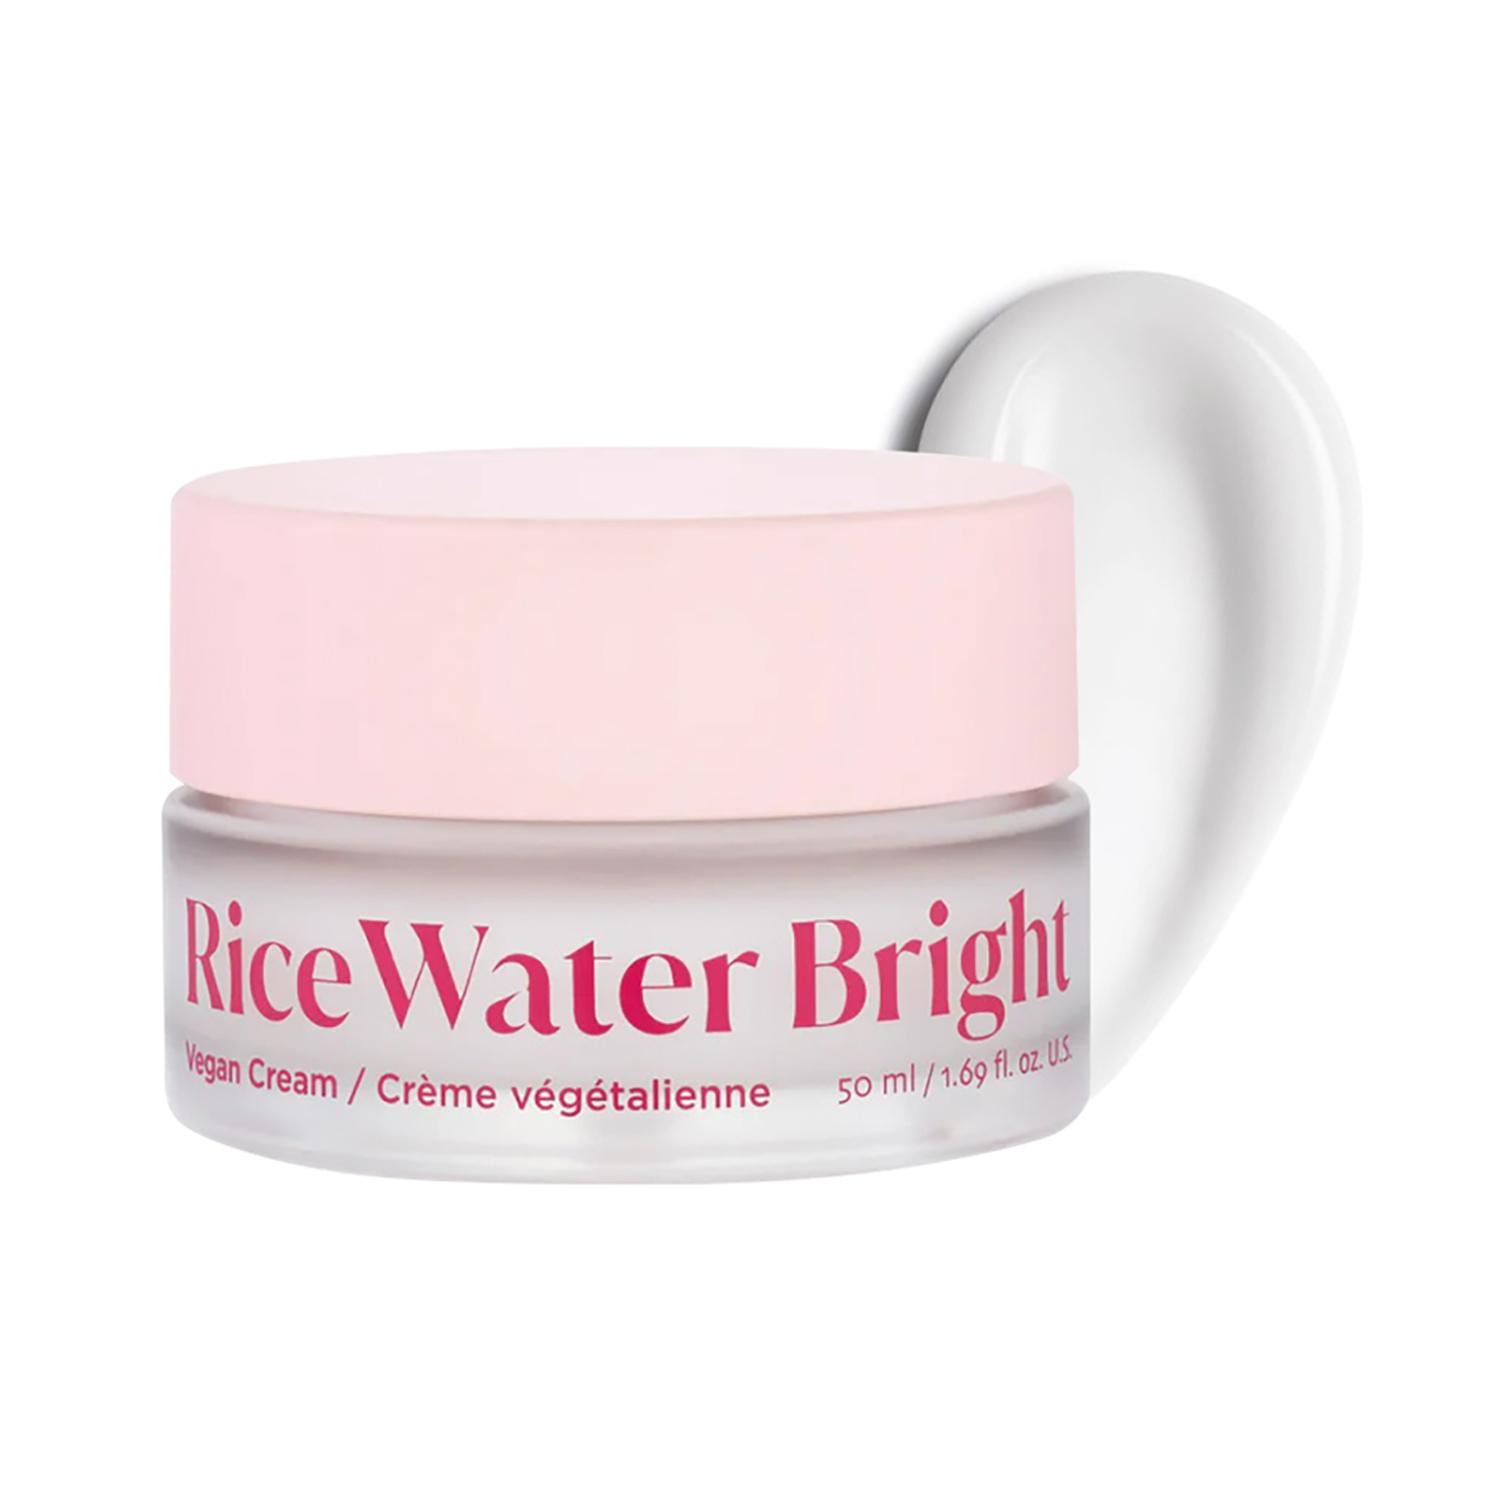 The Face Shop | The Face Shop Rice Water Bright Vegan Cream (50 ml)